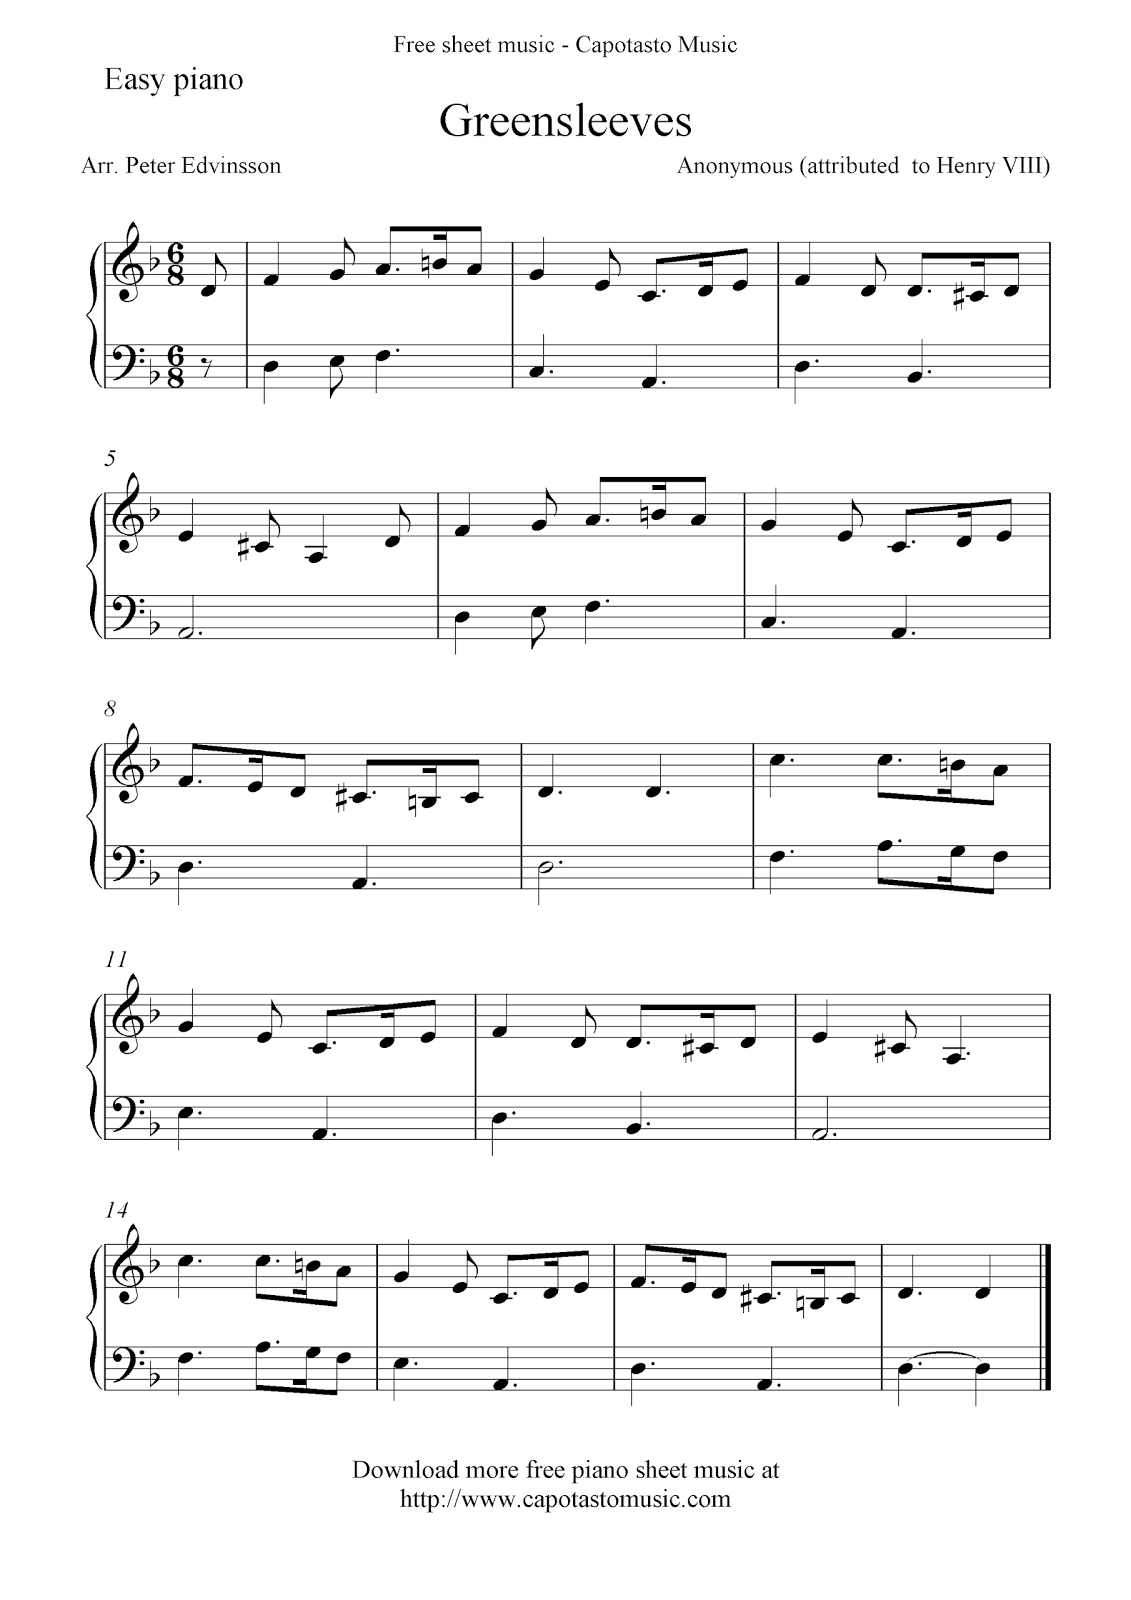 Free Sheet Music Scores: Free Piano Sheet Music Notes, Greensleeves - Free Printable Sheet Music For Piano